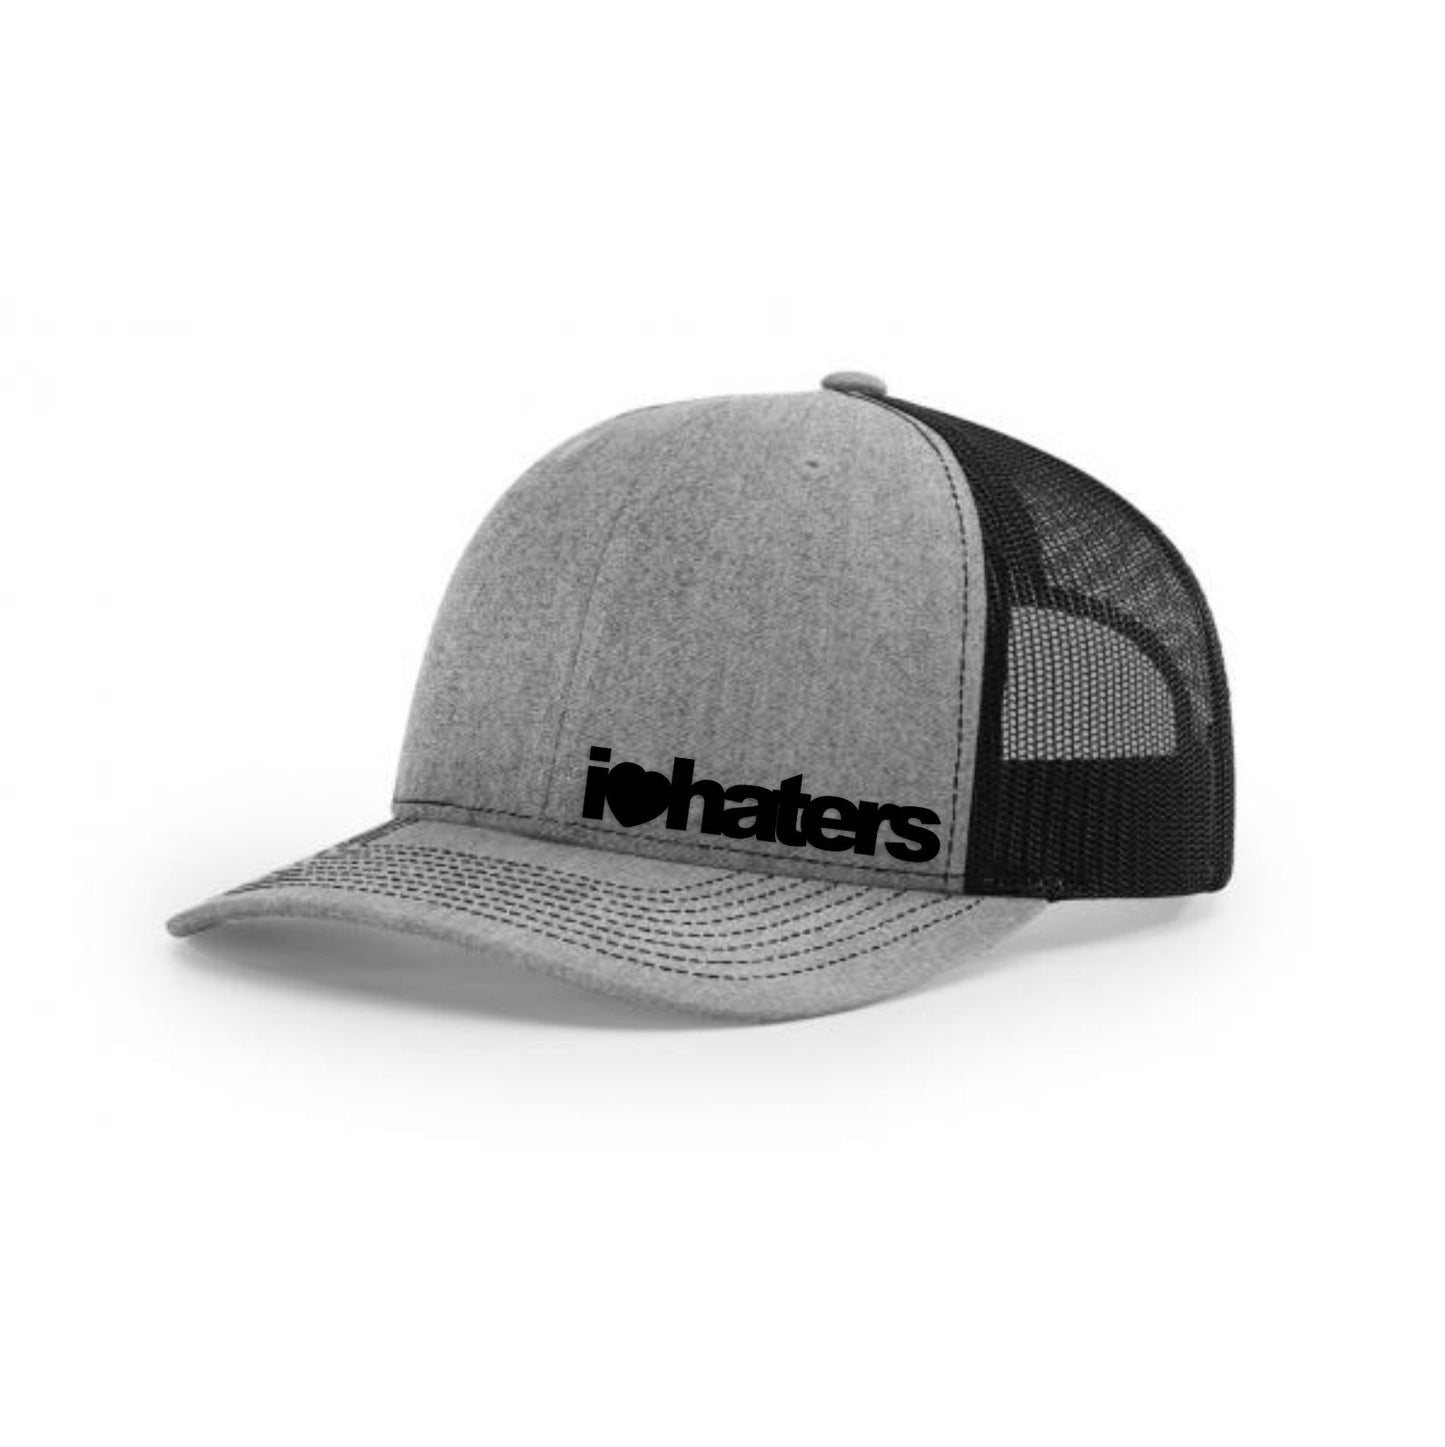 I Love Haters R-FLEX Richardson 110 Stretch Hat